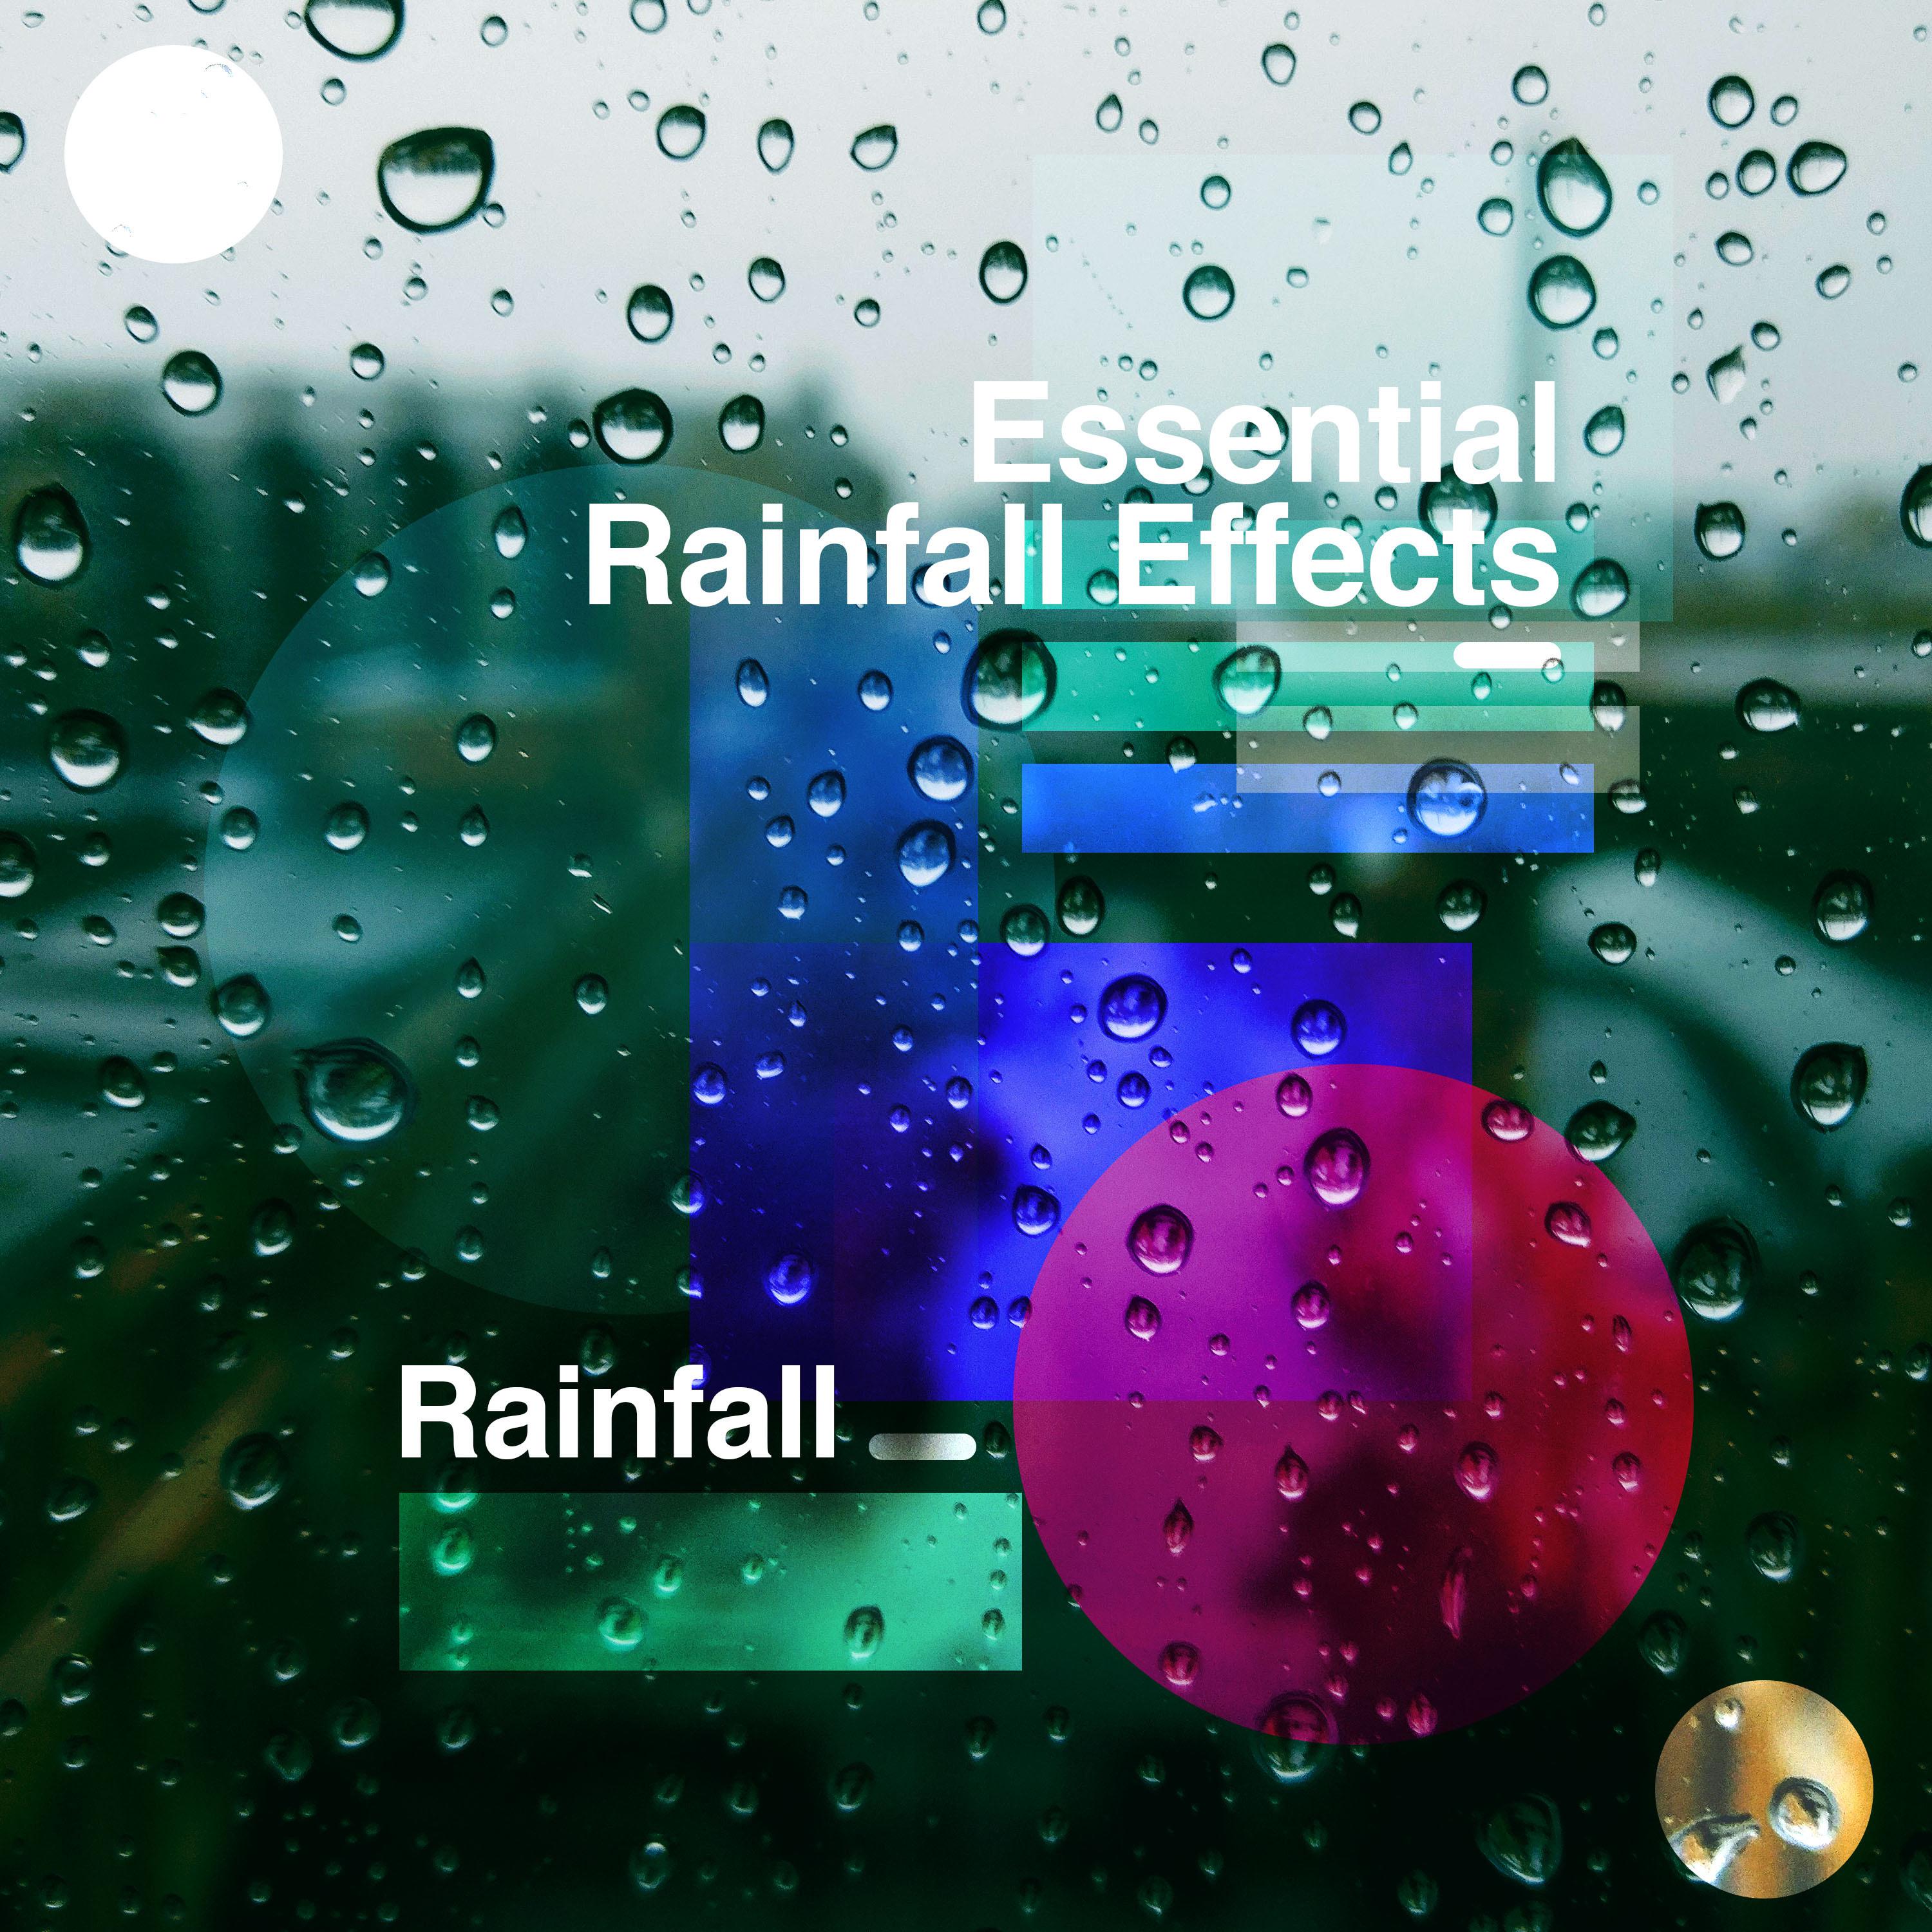 Essential Rainfall Effects